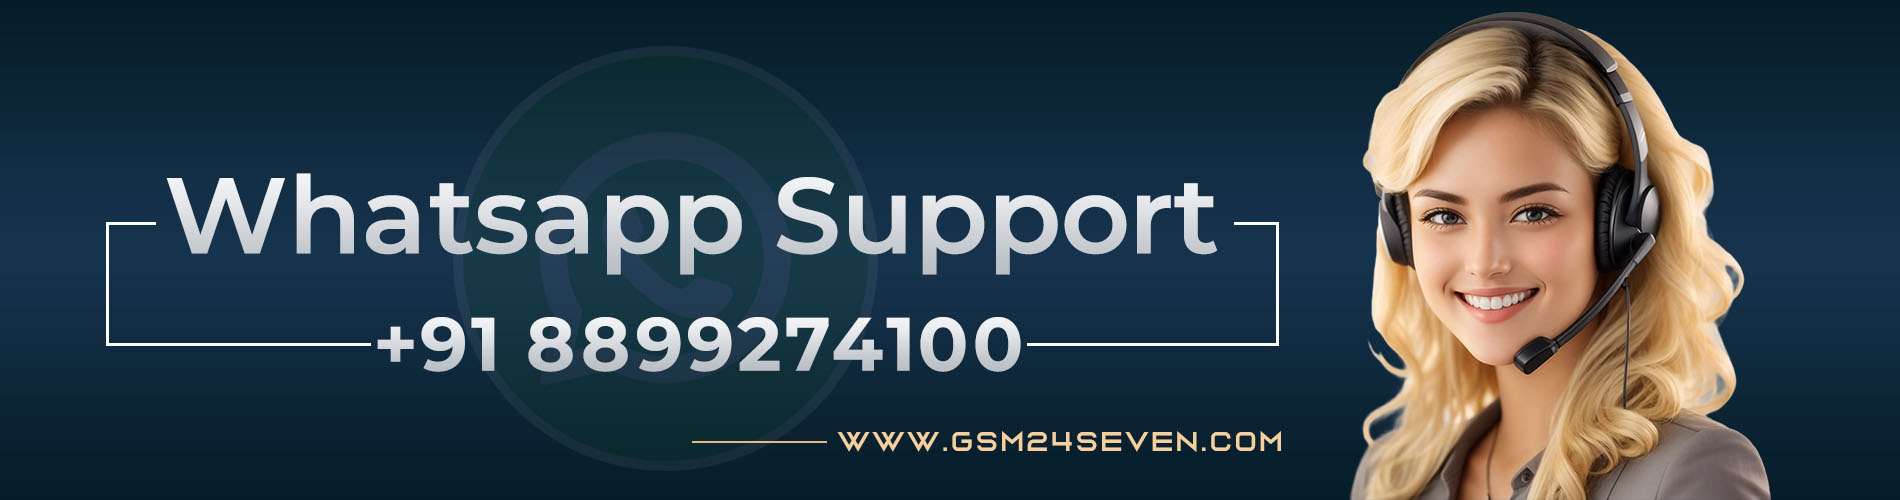 GSM24SEVEN Whatsapp support